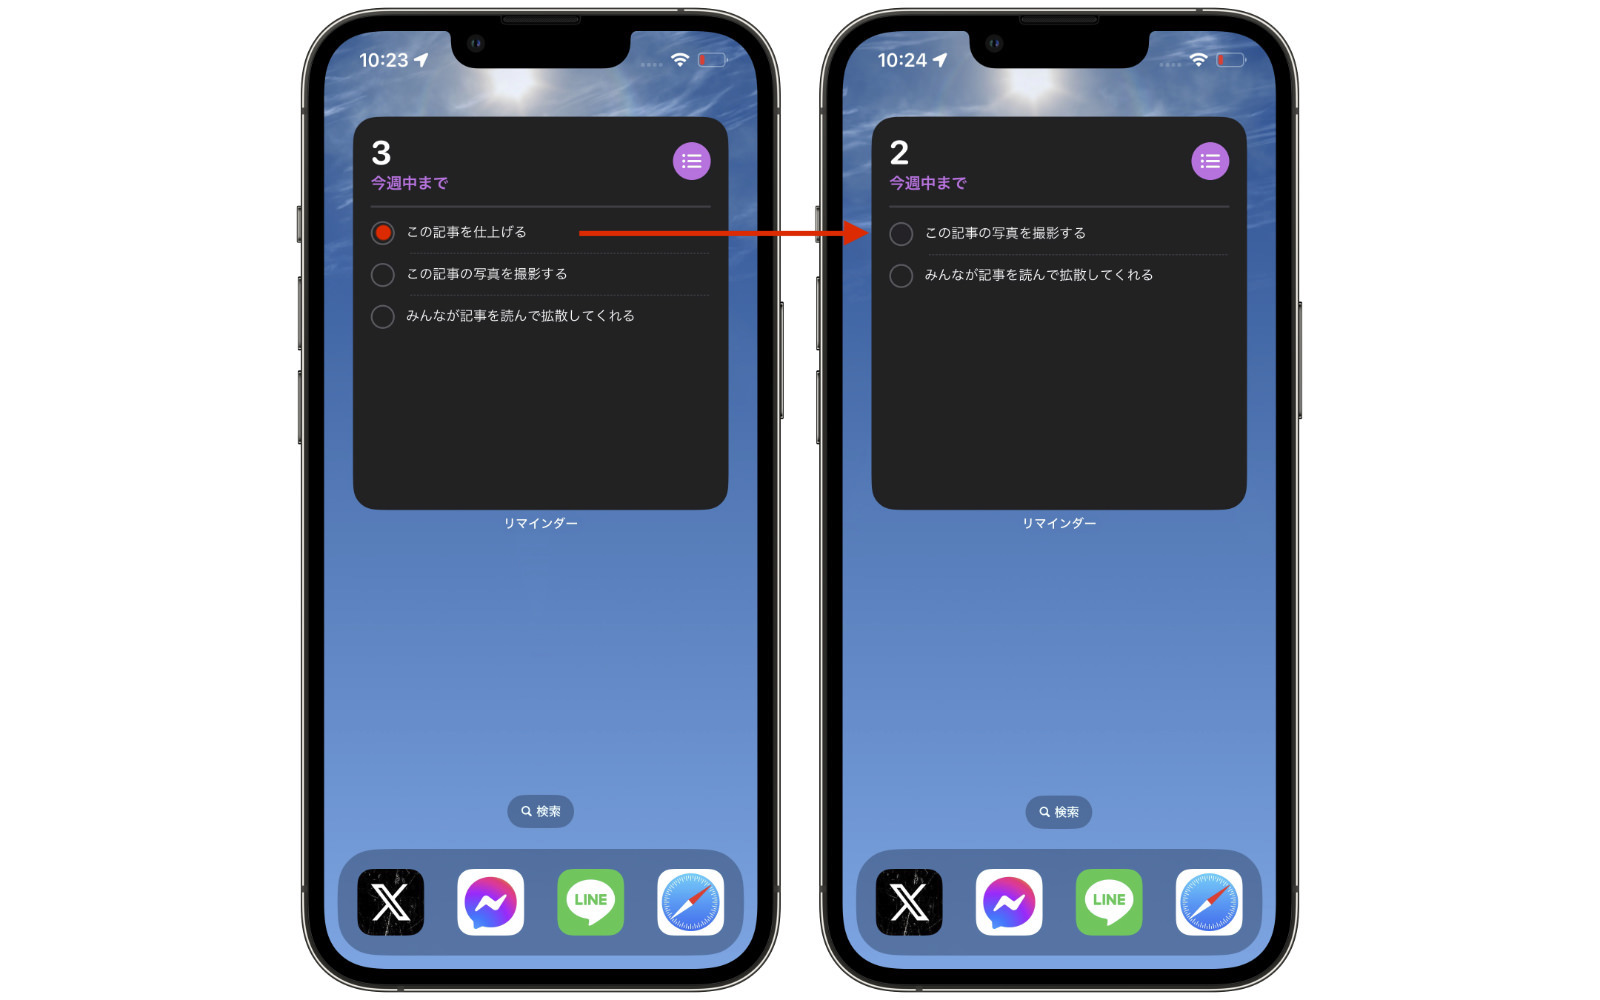 iOS17-widgets-within-home-screen.jpg